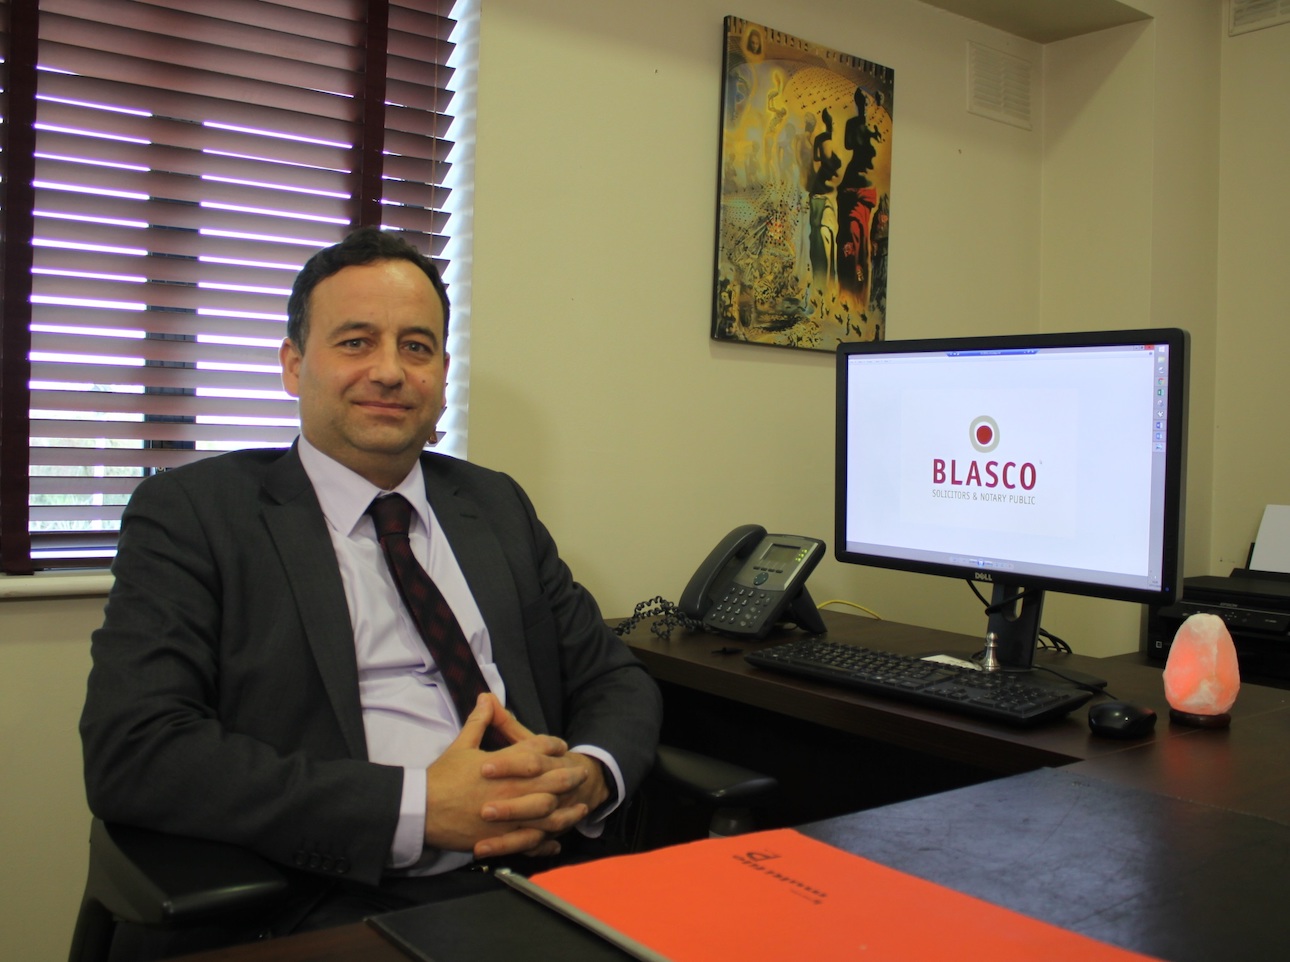 Blasco Solicitors & Notary Public